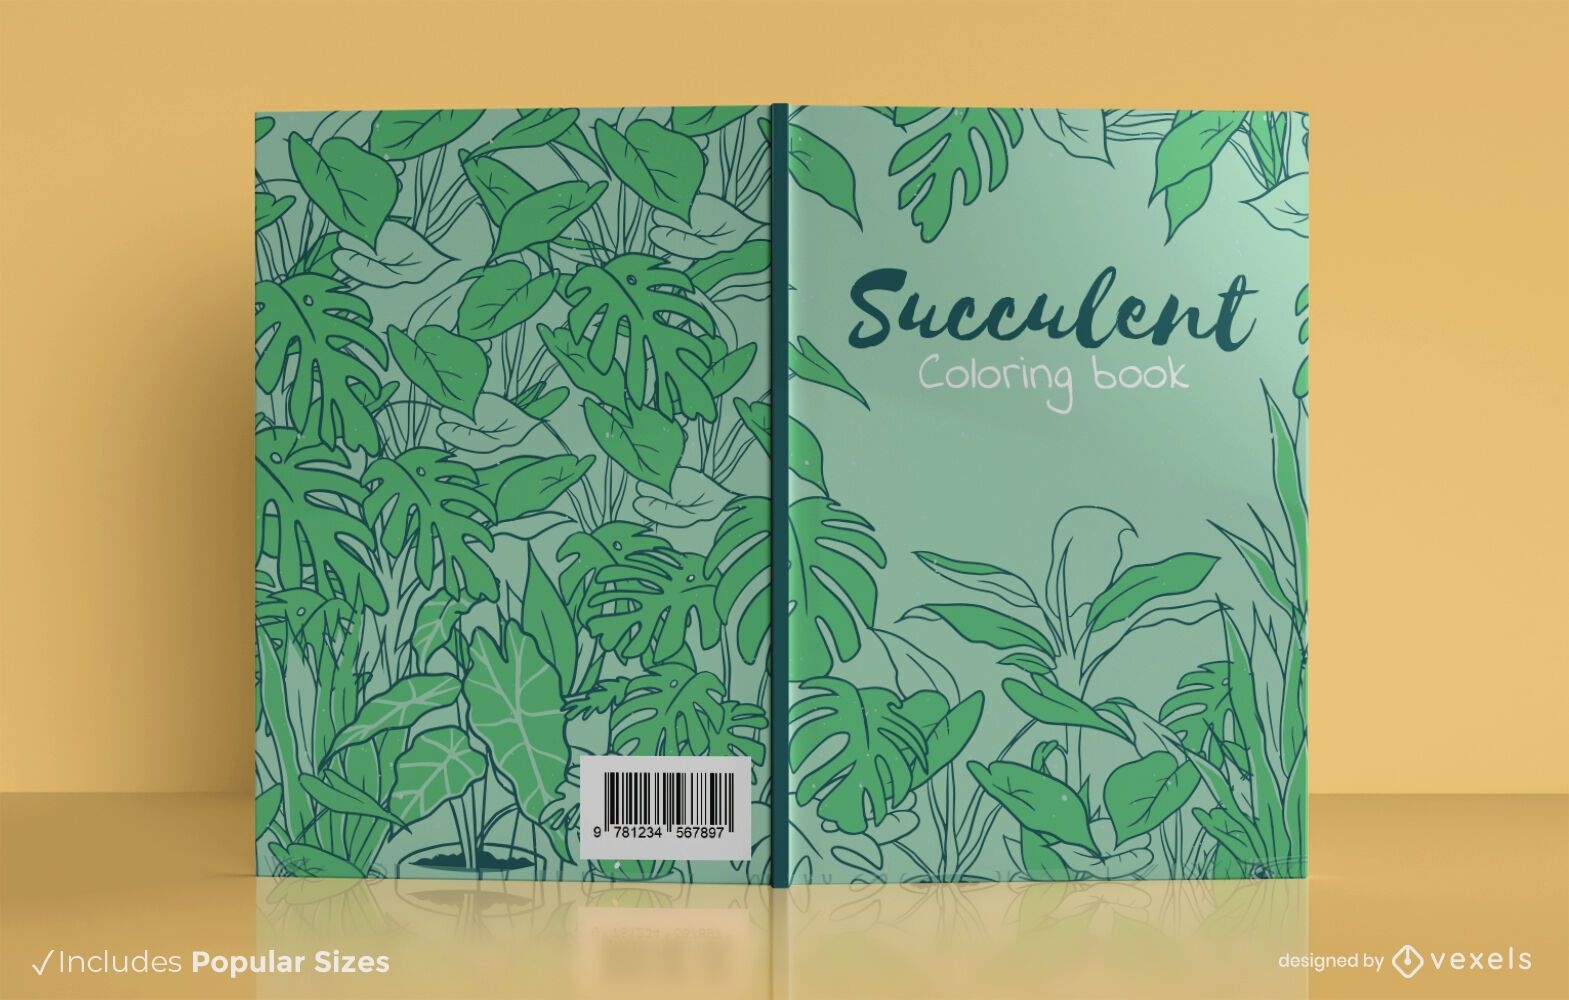 Succulent coloring book cover design